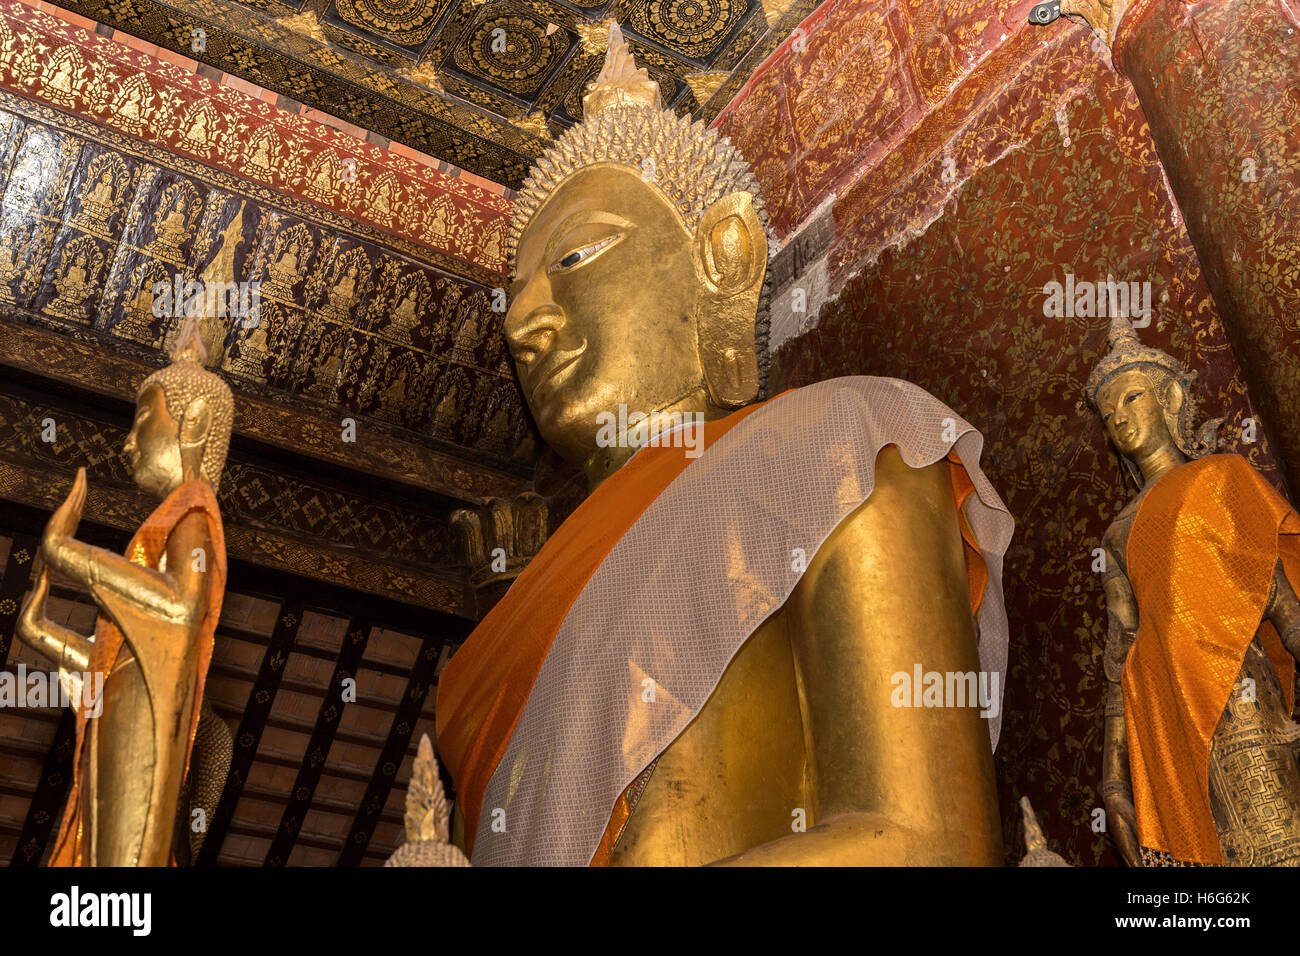 Tempio reale dei Re del Laos, Wat Xieng Thong, Monastero della Città d'Oro, tempio buddista / monastero del Laos, Luang Prabang, Laos Foto Stock